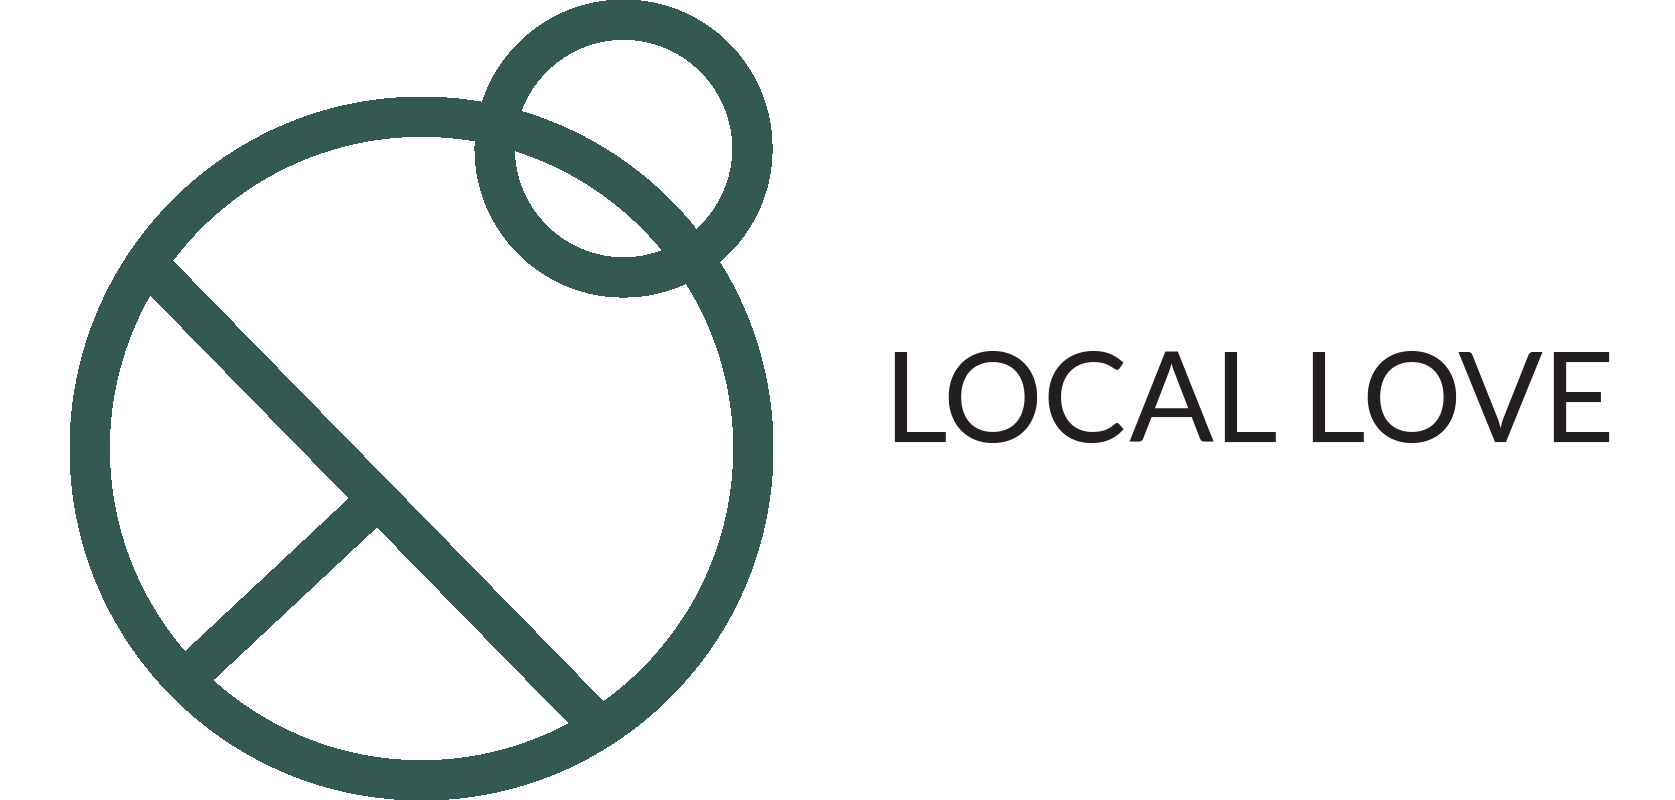 local love logo